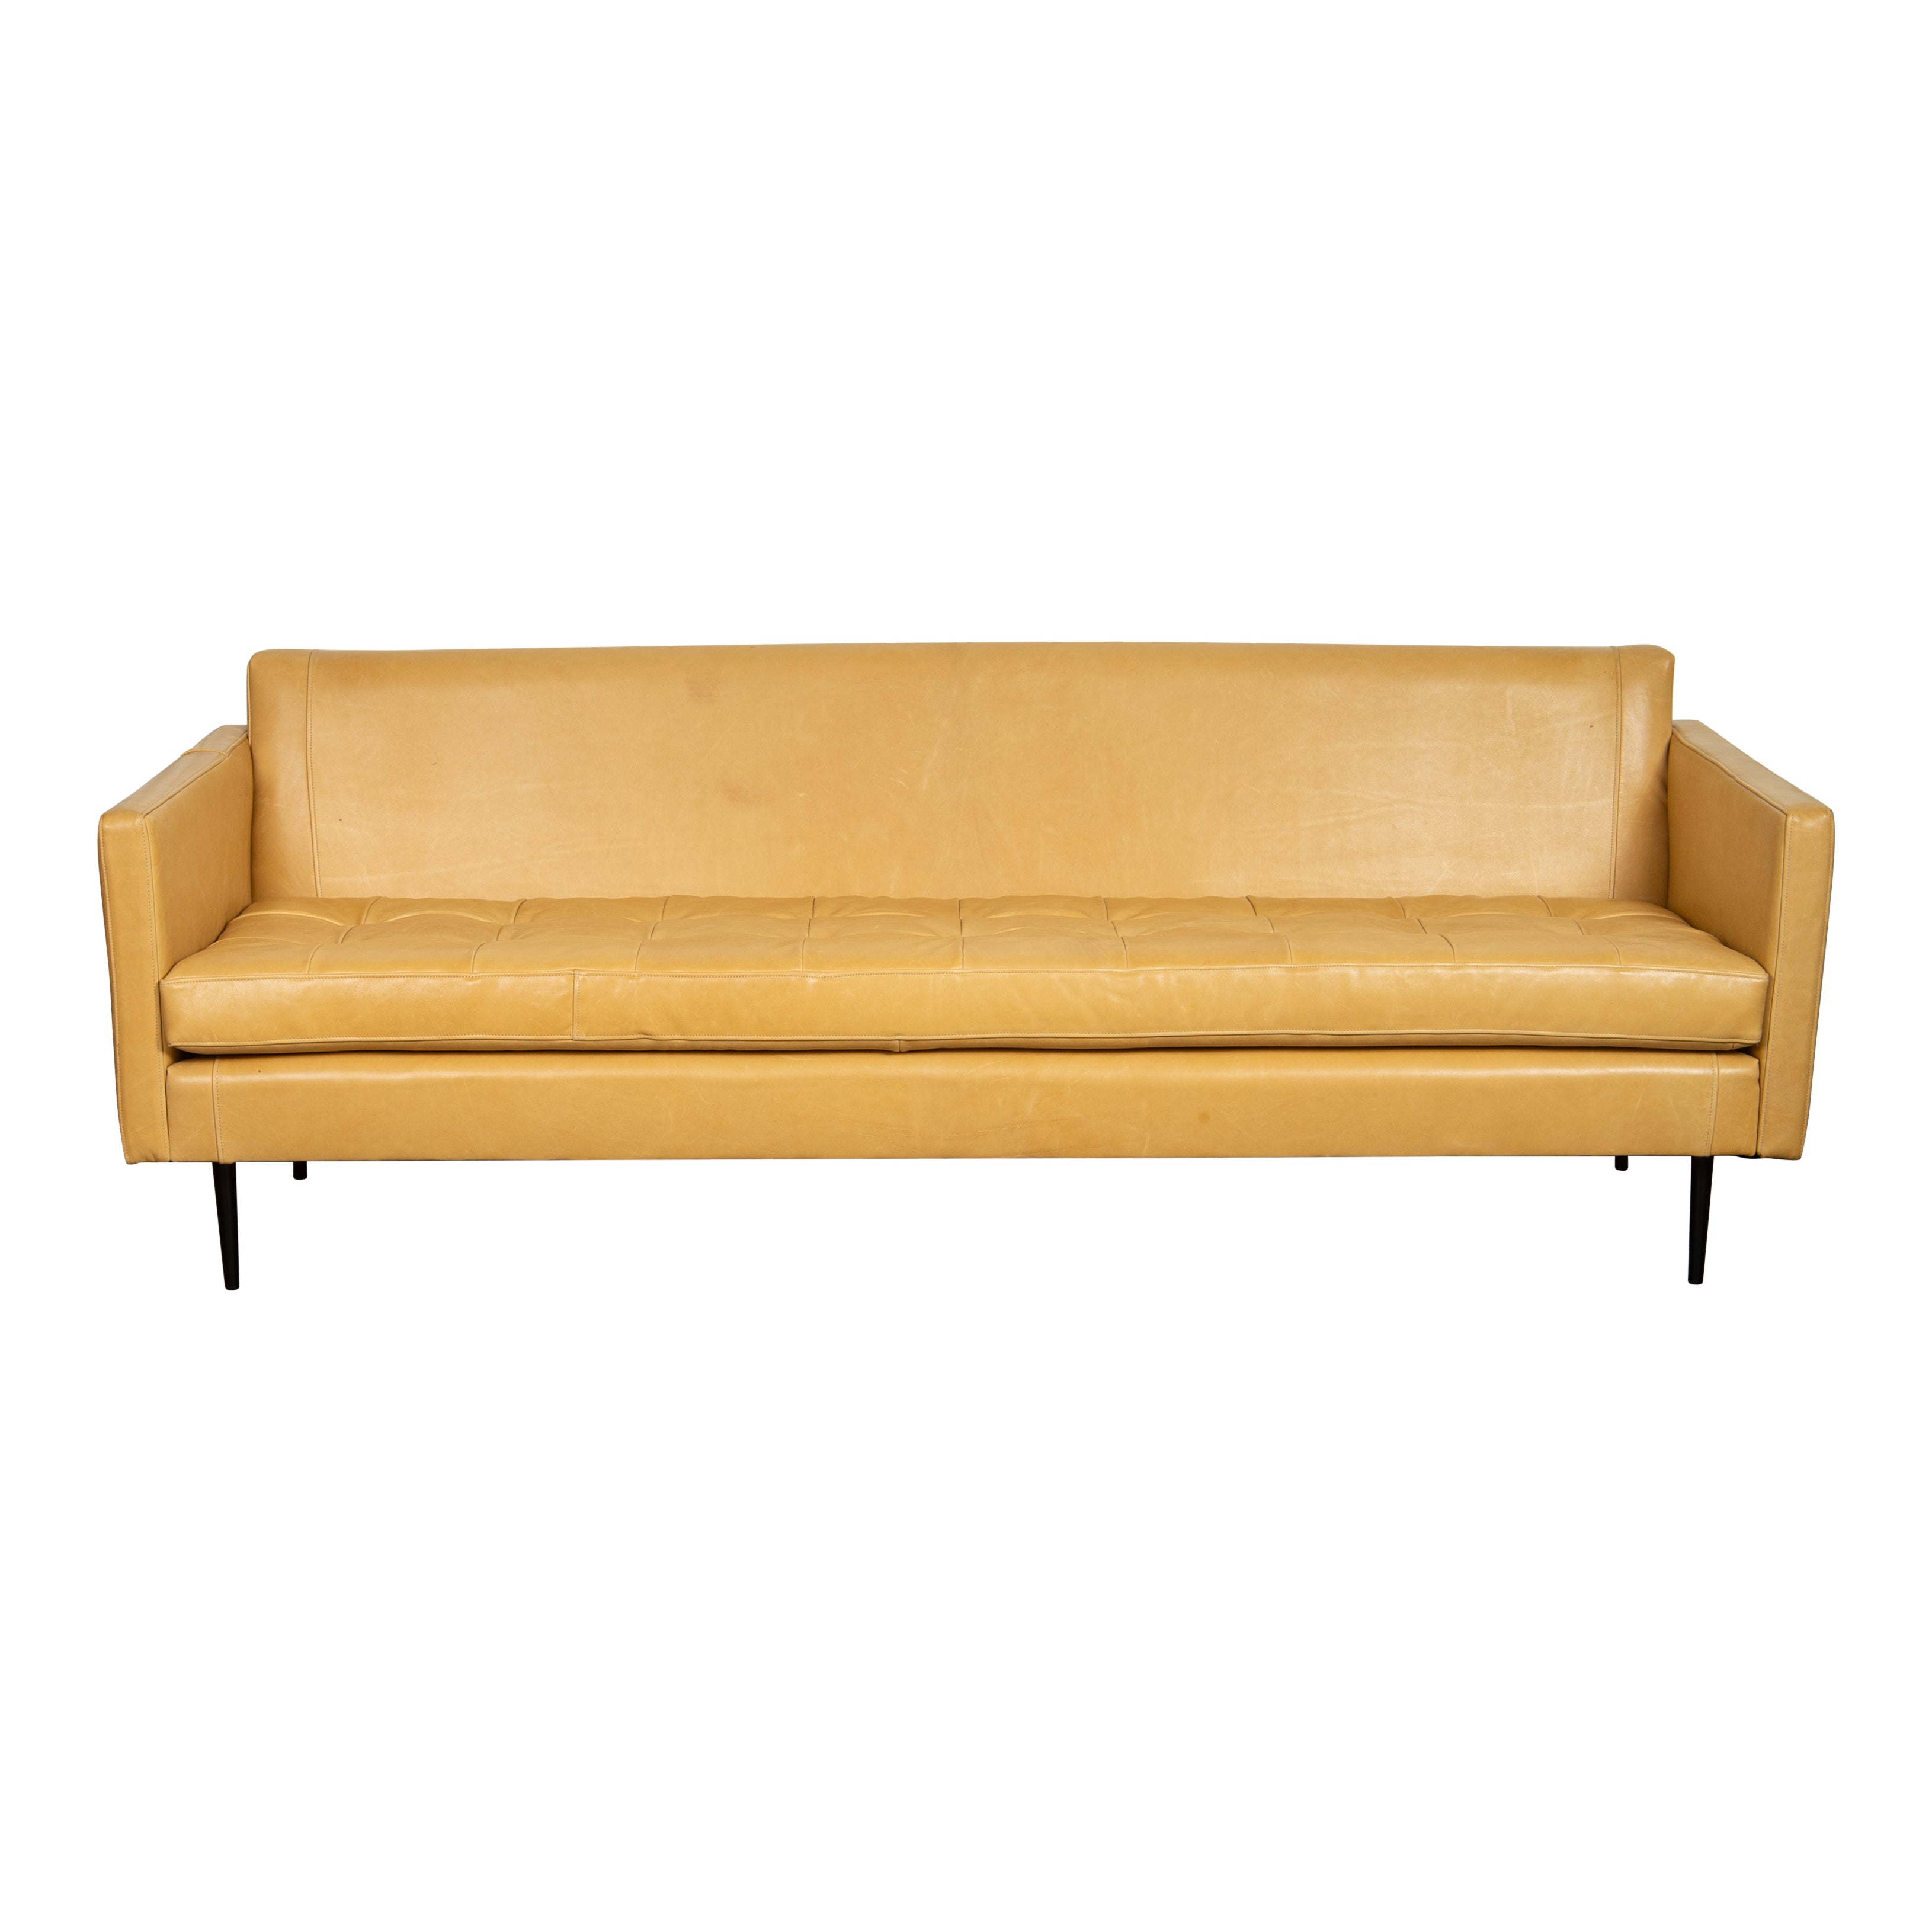 Savonna Yellow Couch